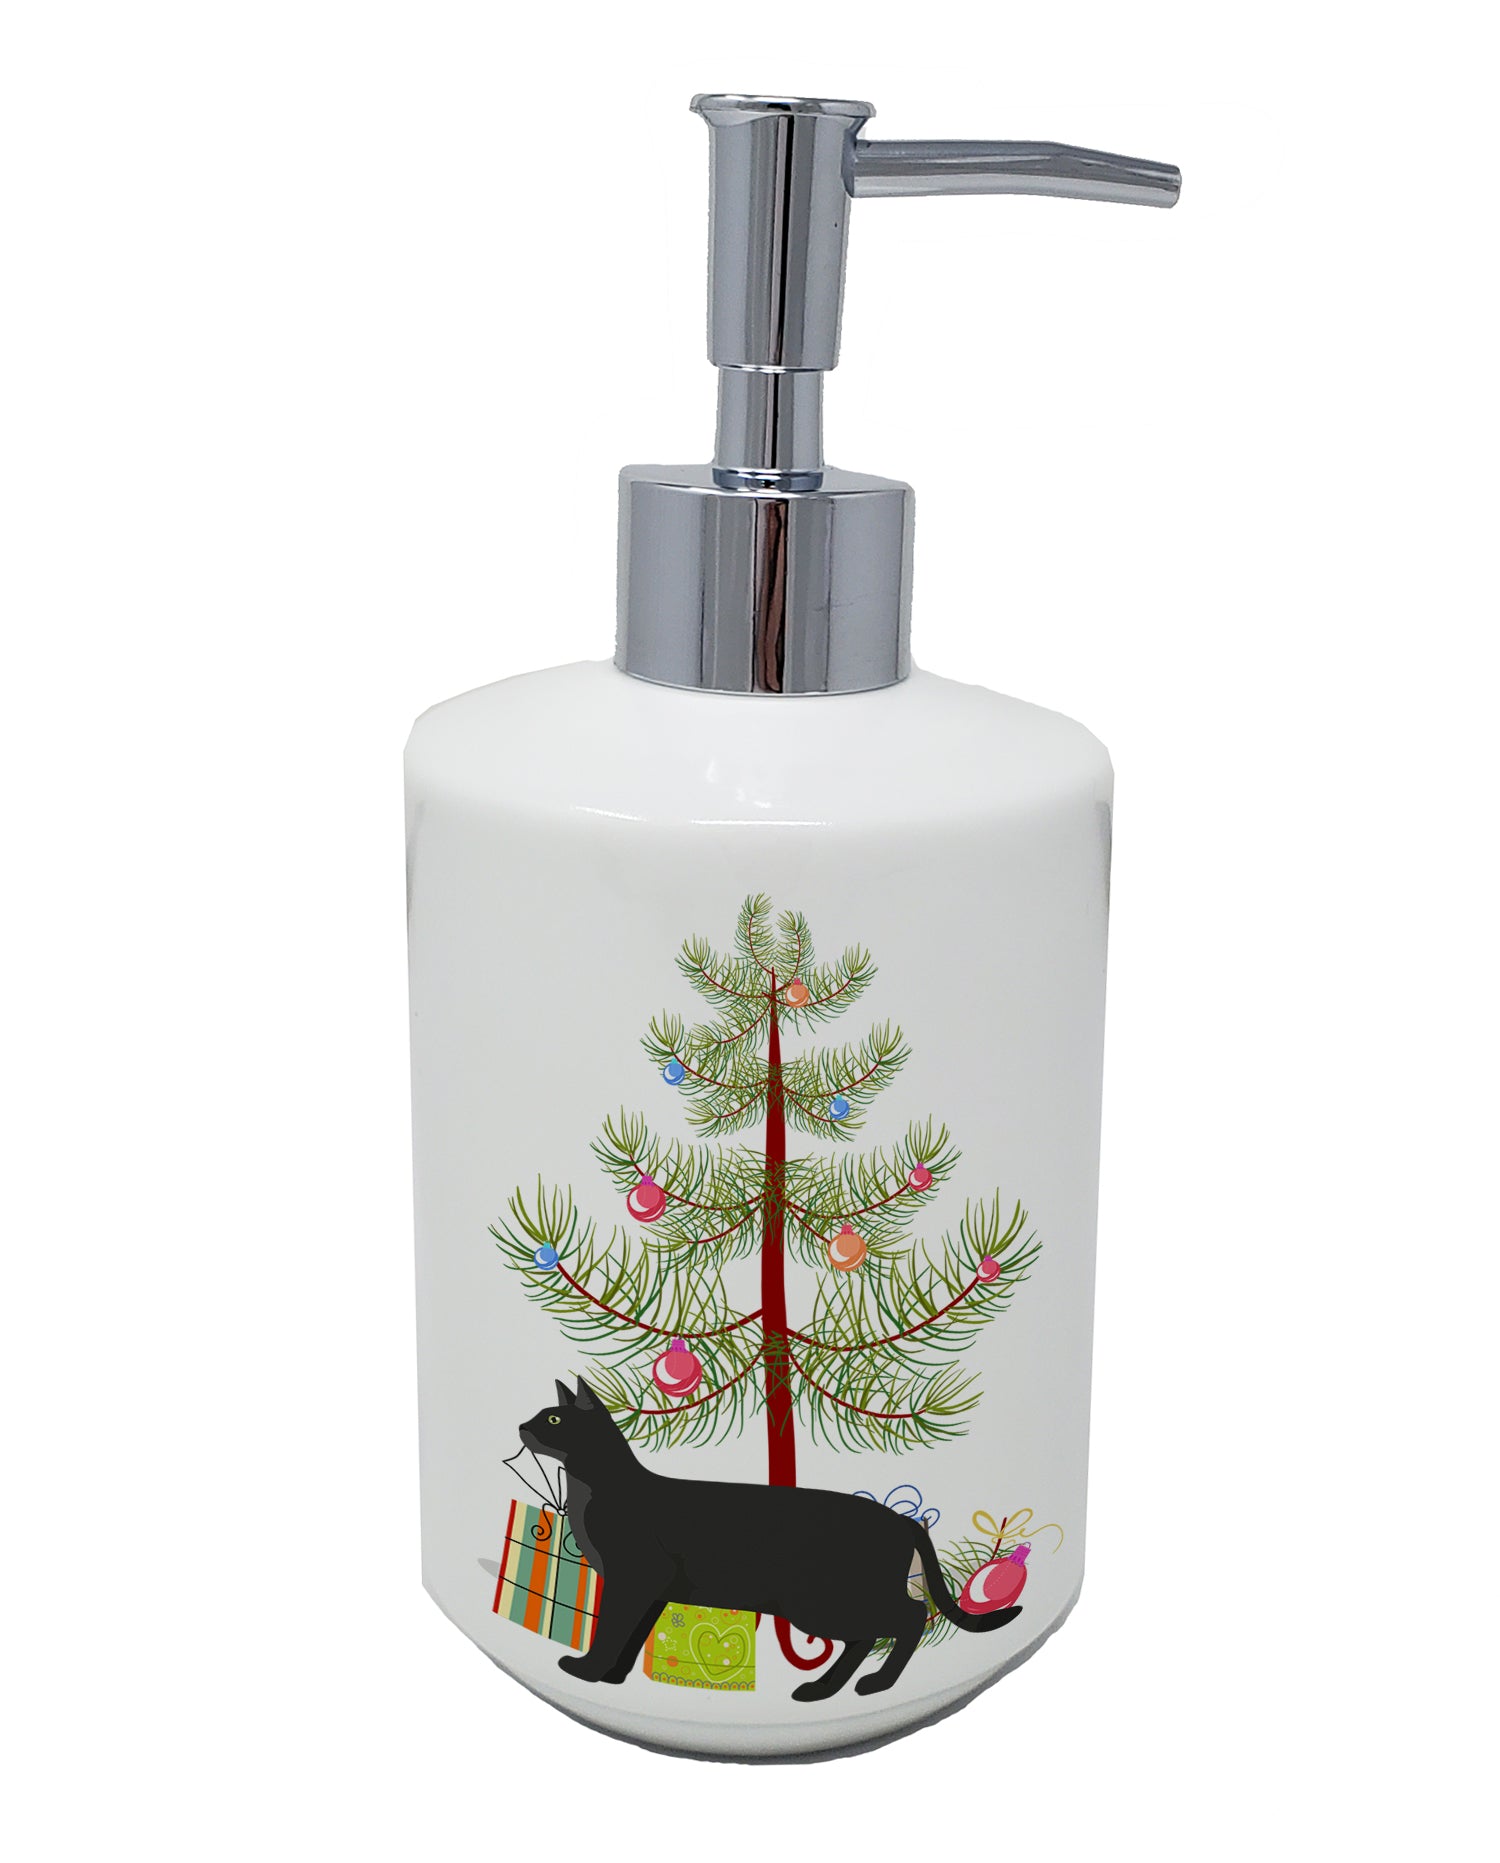 Buy this Chausie Black Cat Merry Christmas Ceramic Soap Dispenser